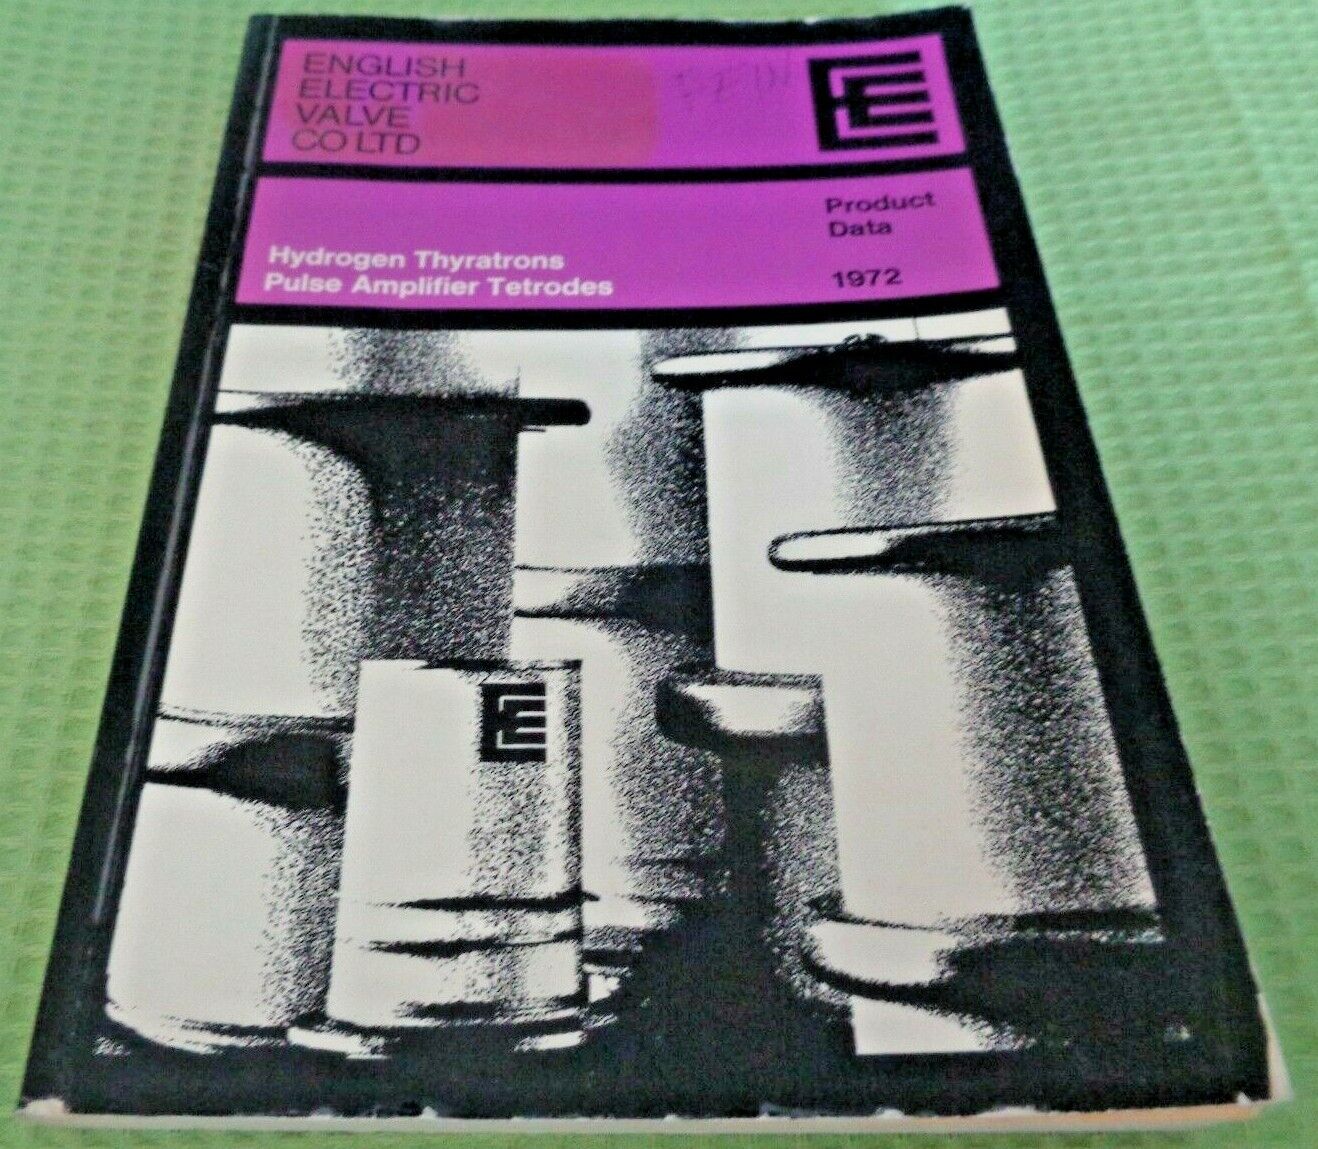 Manual English Electric Valve 1972 Hydrogen Thyratrons Pulse Amplifier Tetrodes